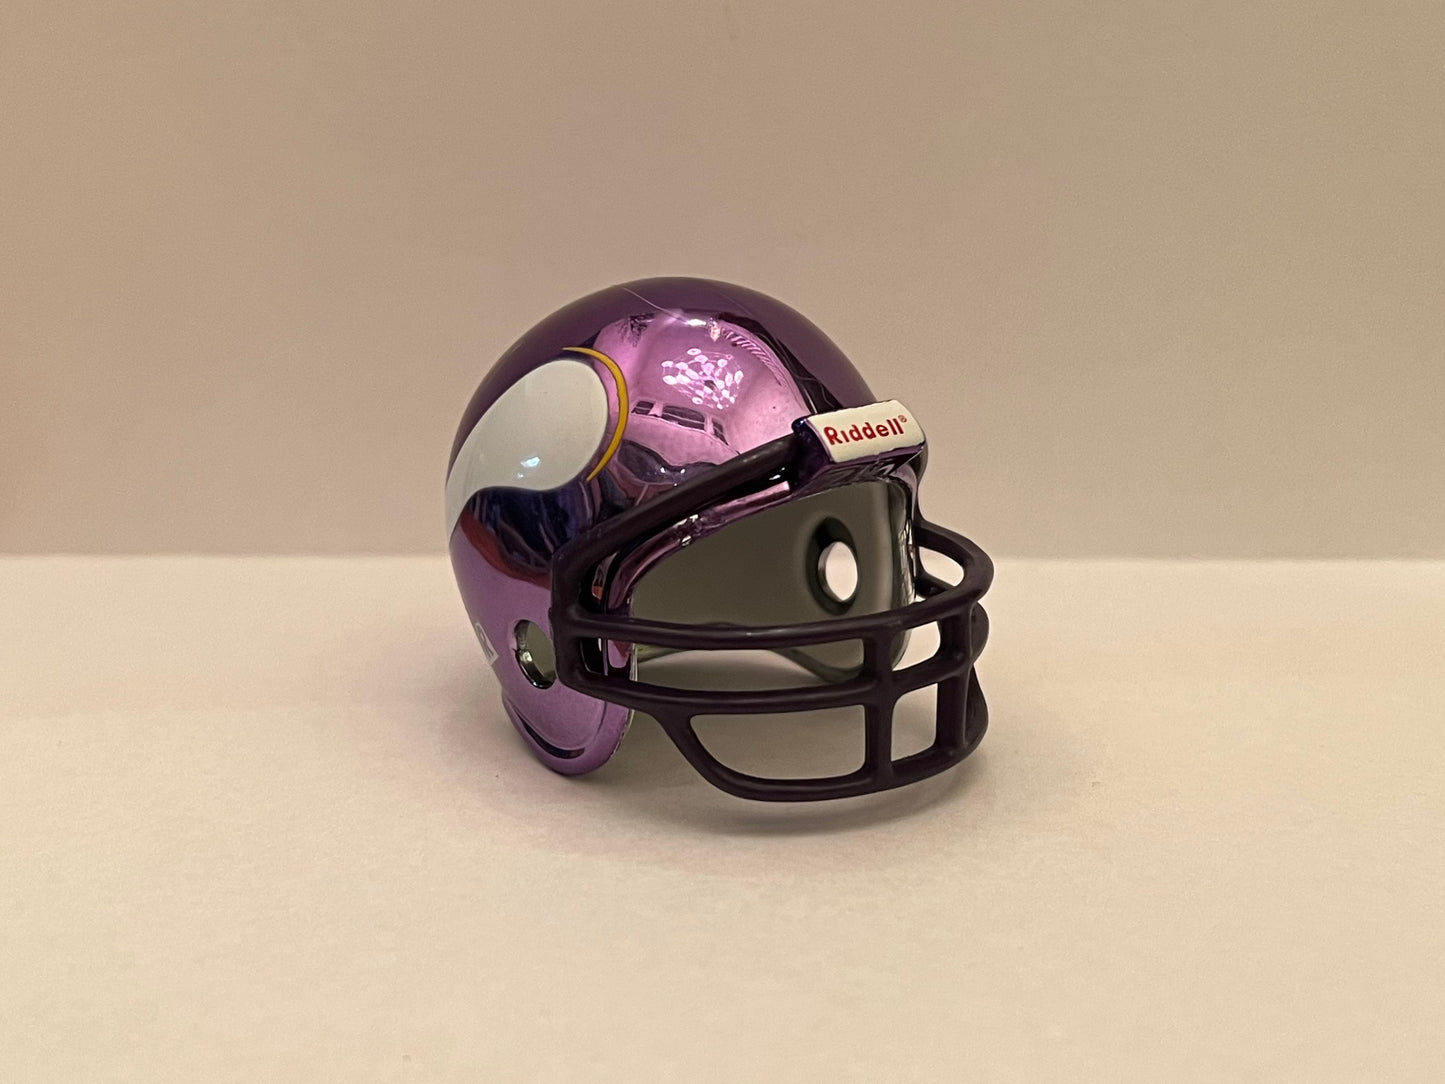 Minnesota Vikings Riddell NFL Pocket Pro Helmet 1985-2006 Throwback Chrome  WESTBROOKSPORTSCARDS   